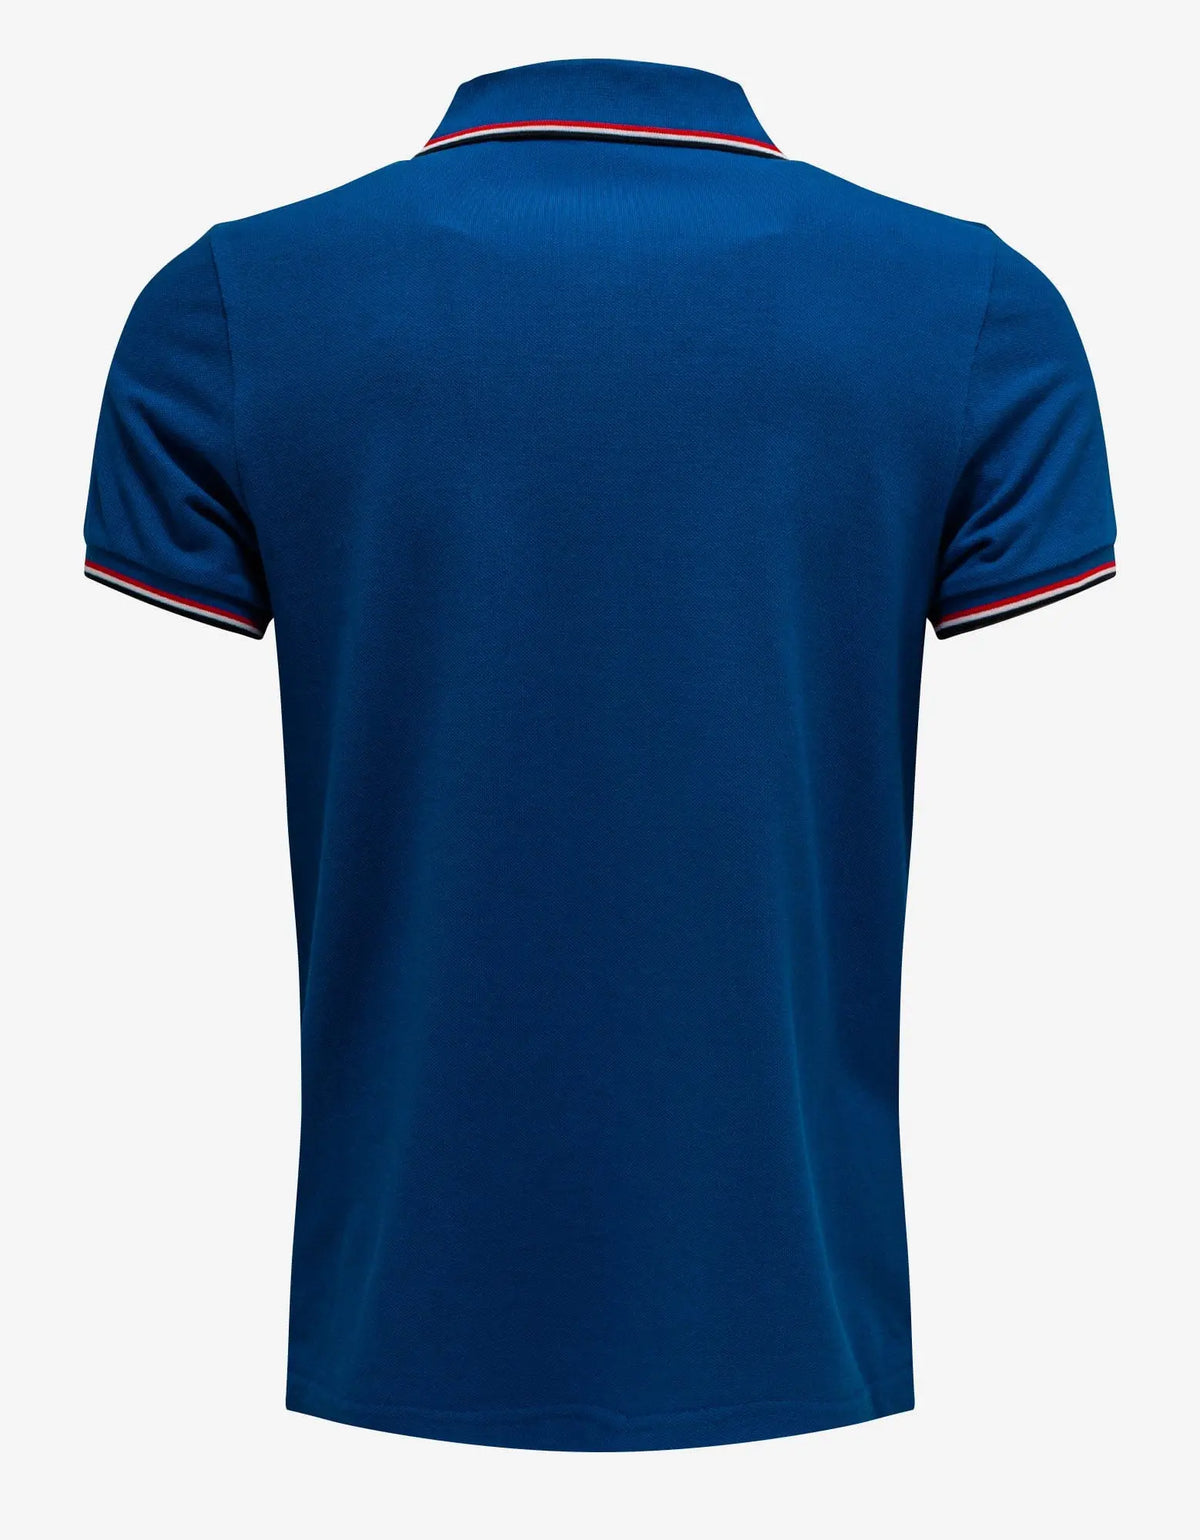 Cosmic Blue Tricolour Trim Polo T-Shirt